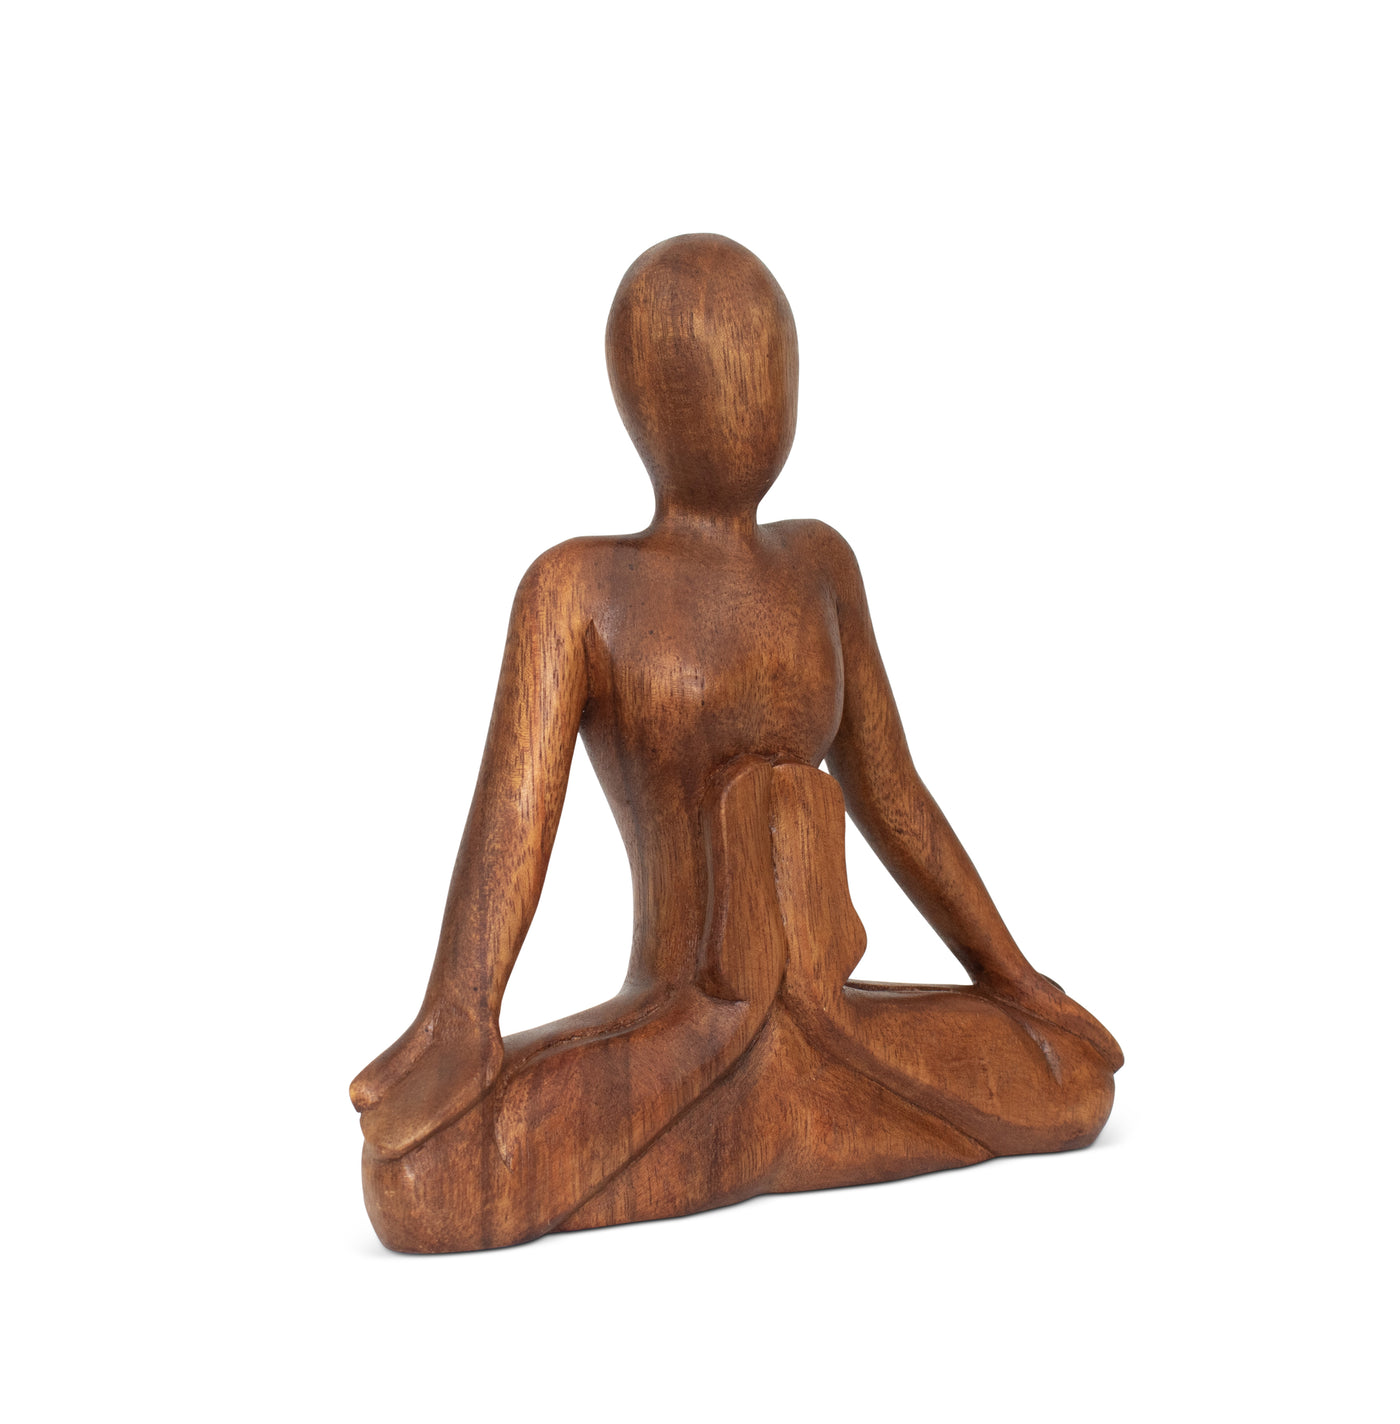 8" Wooden Handmade Mini Yoga Figurines, Yoga Pose Statue, Yoga Room Studio Decor, Mindful Home Decor Yogi Gift, Decorative Shelf Decor Objects, Zen Inspired - Cobbler's Pose